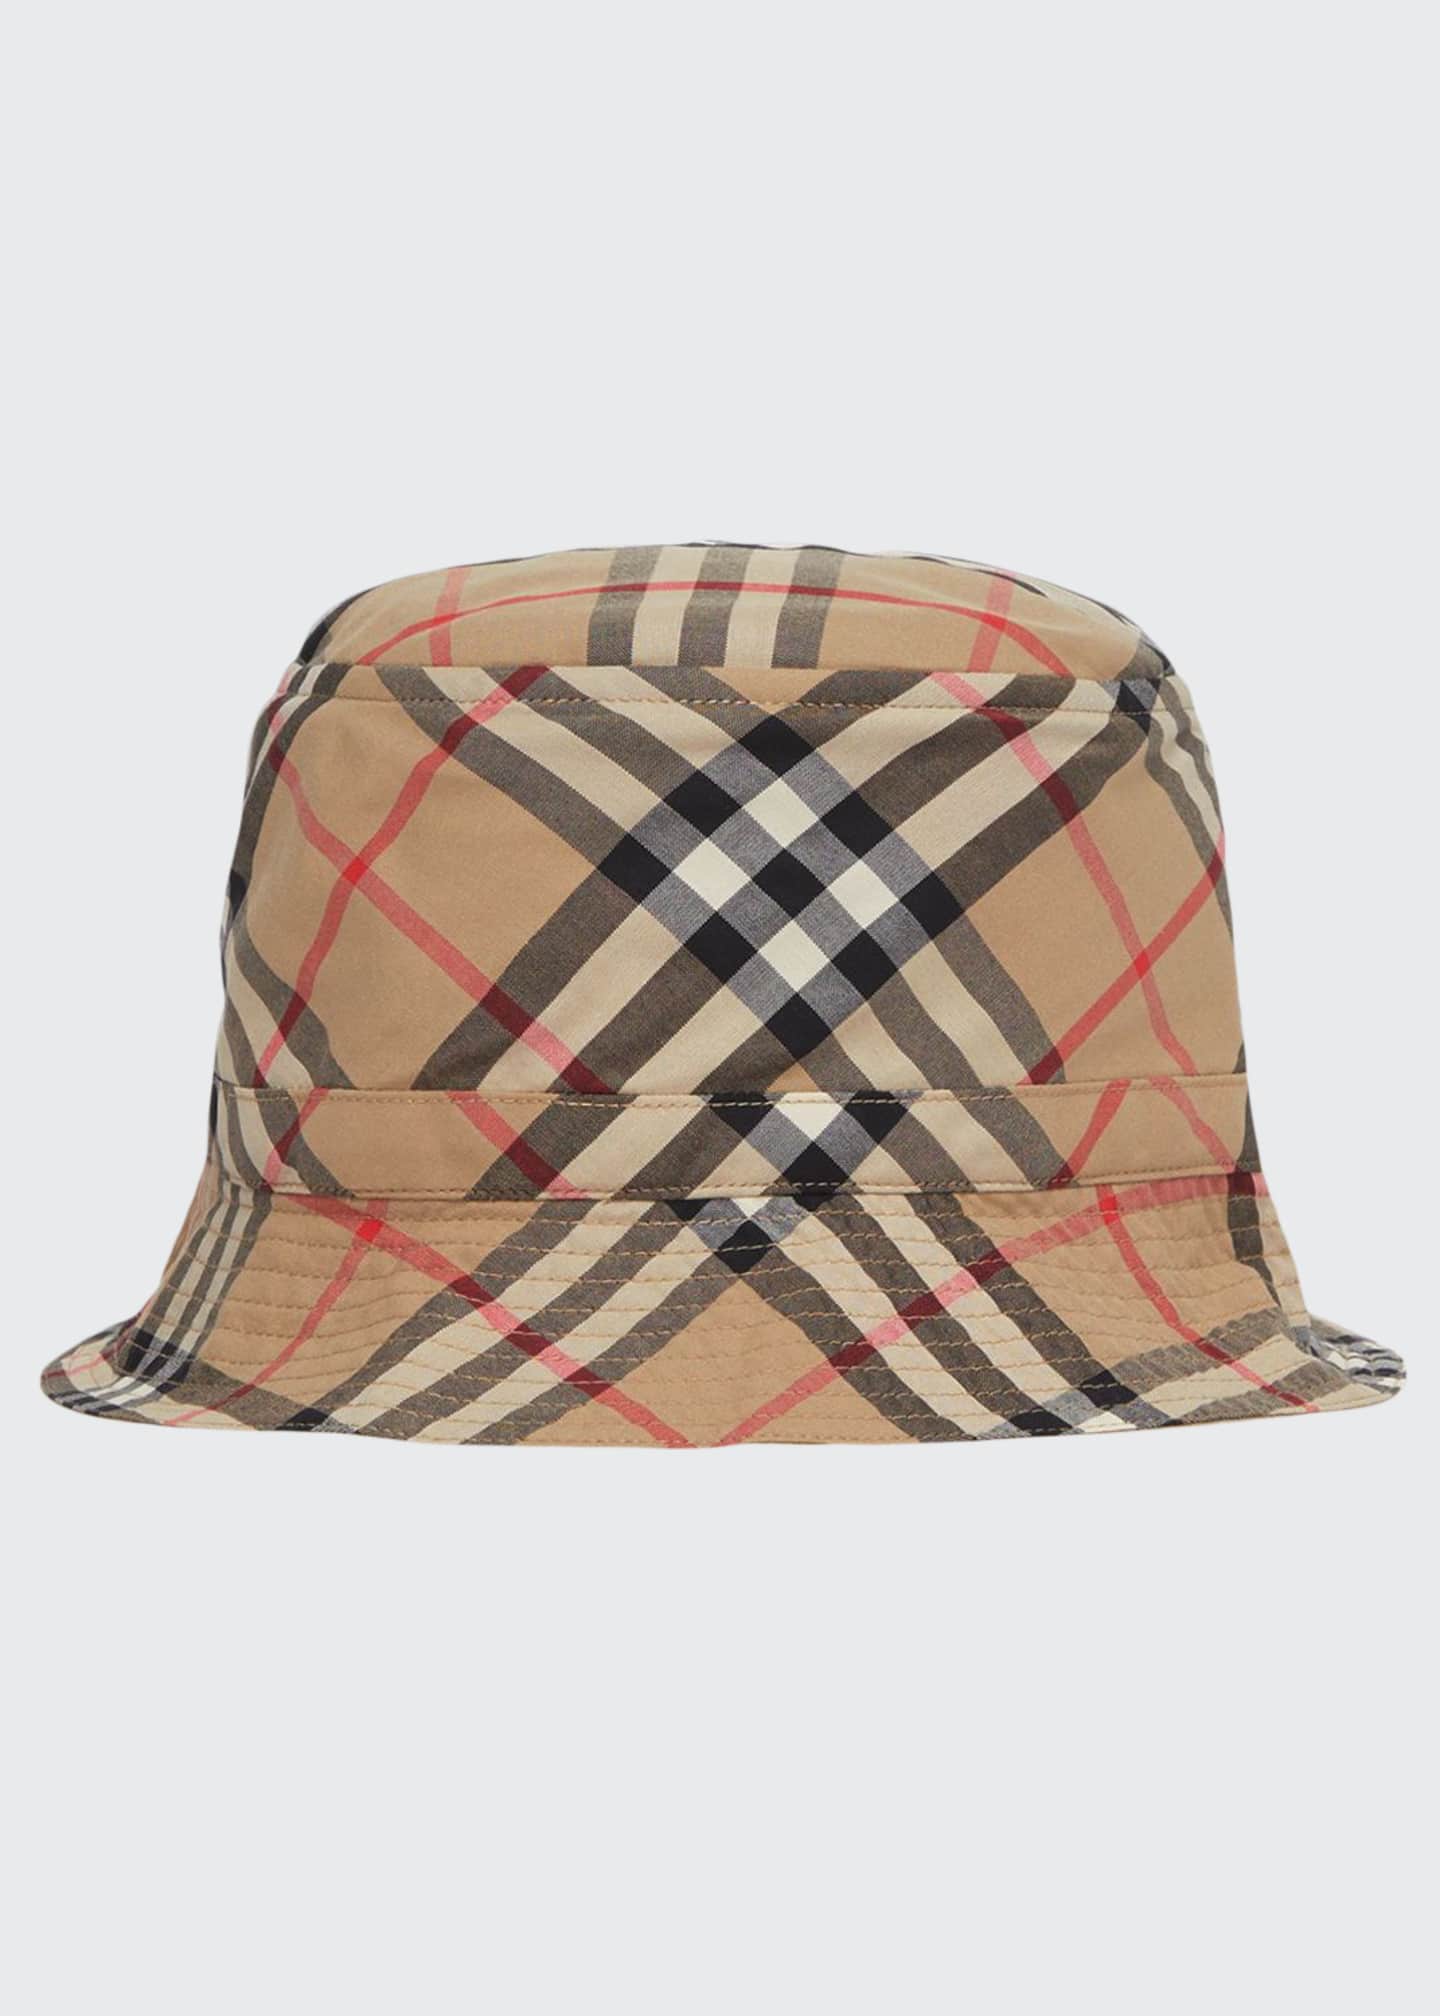 Burberry Kid's Gabriel Vintage Check Bucket Hat, Size S-M